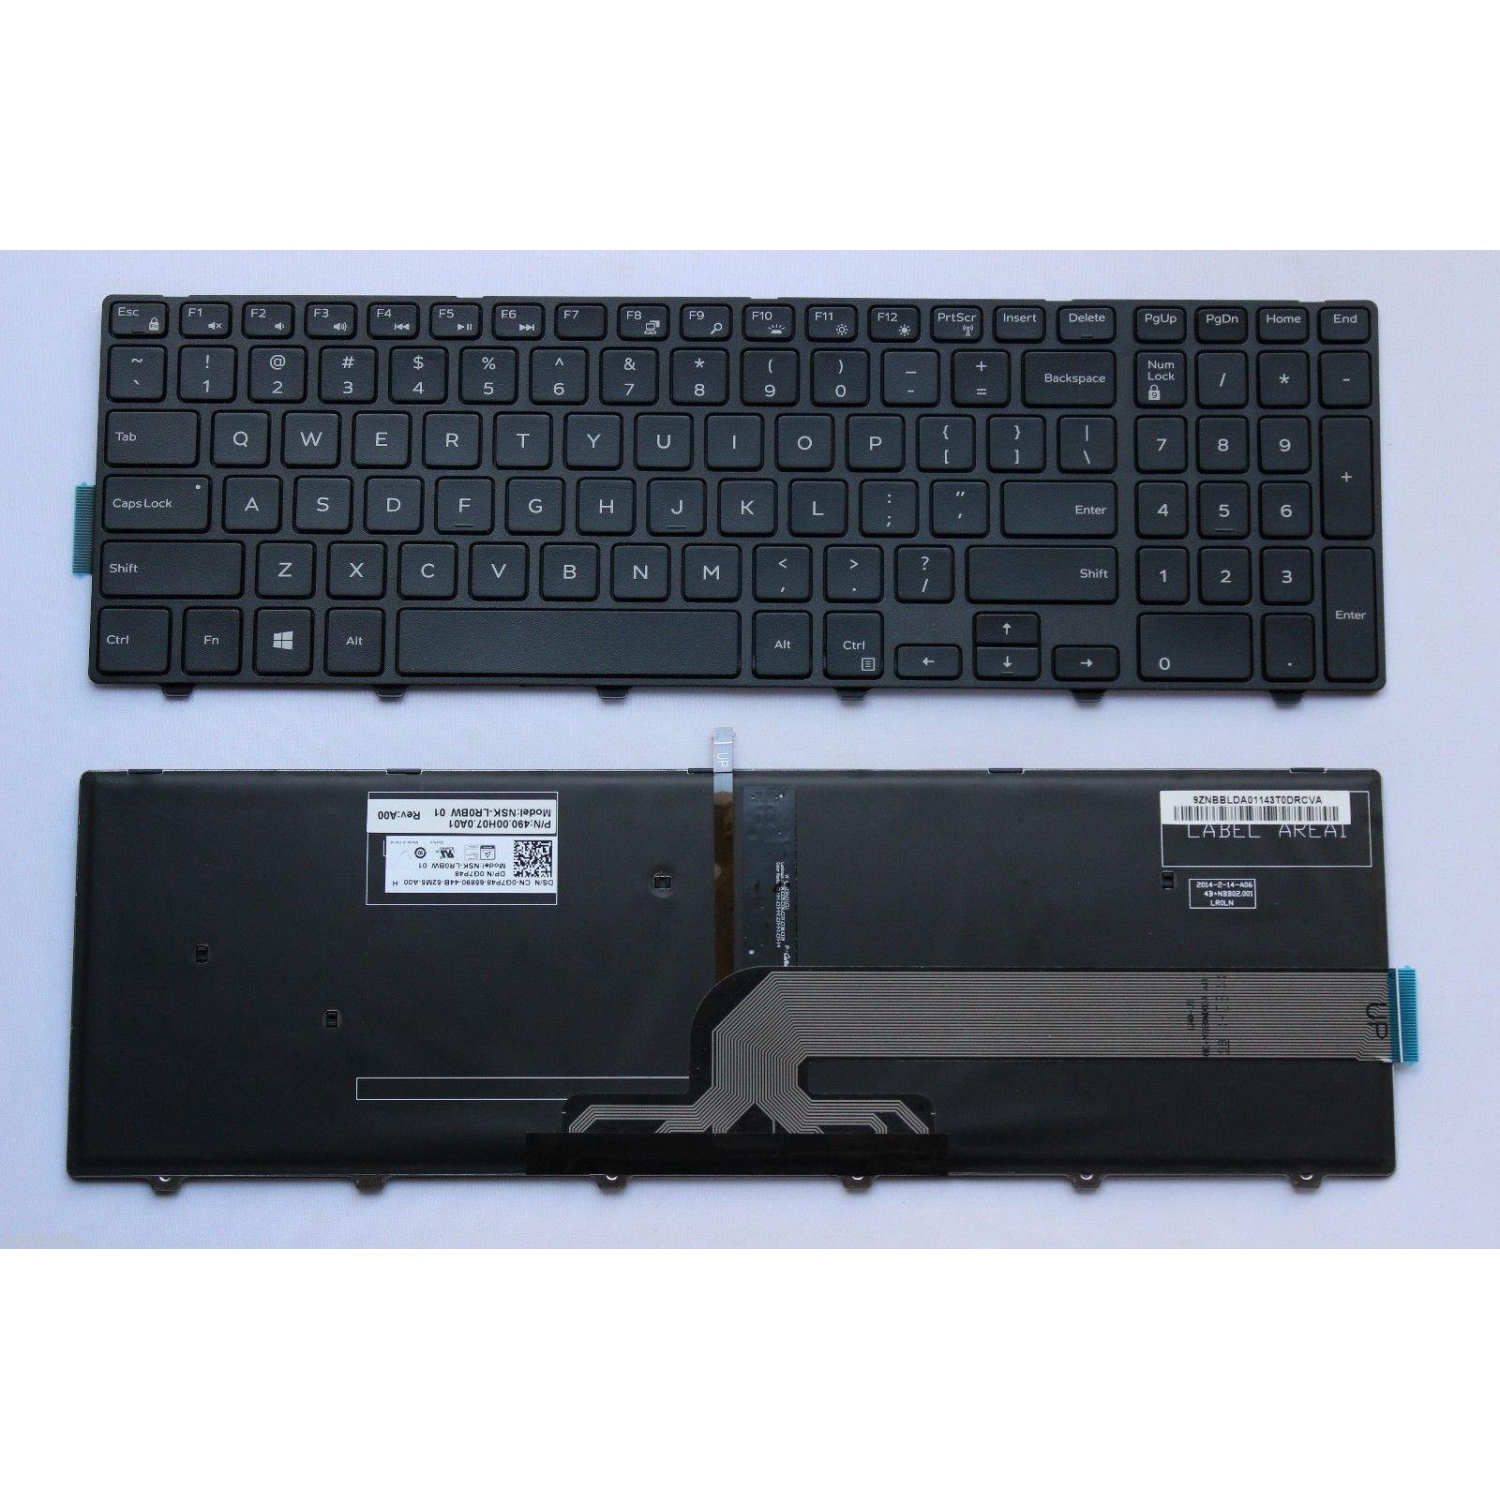 New Dell Inspiron 15 3552 3555 3565 3567 5559 5566 Keyboard Backlit English G7P48 0G7P48